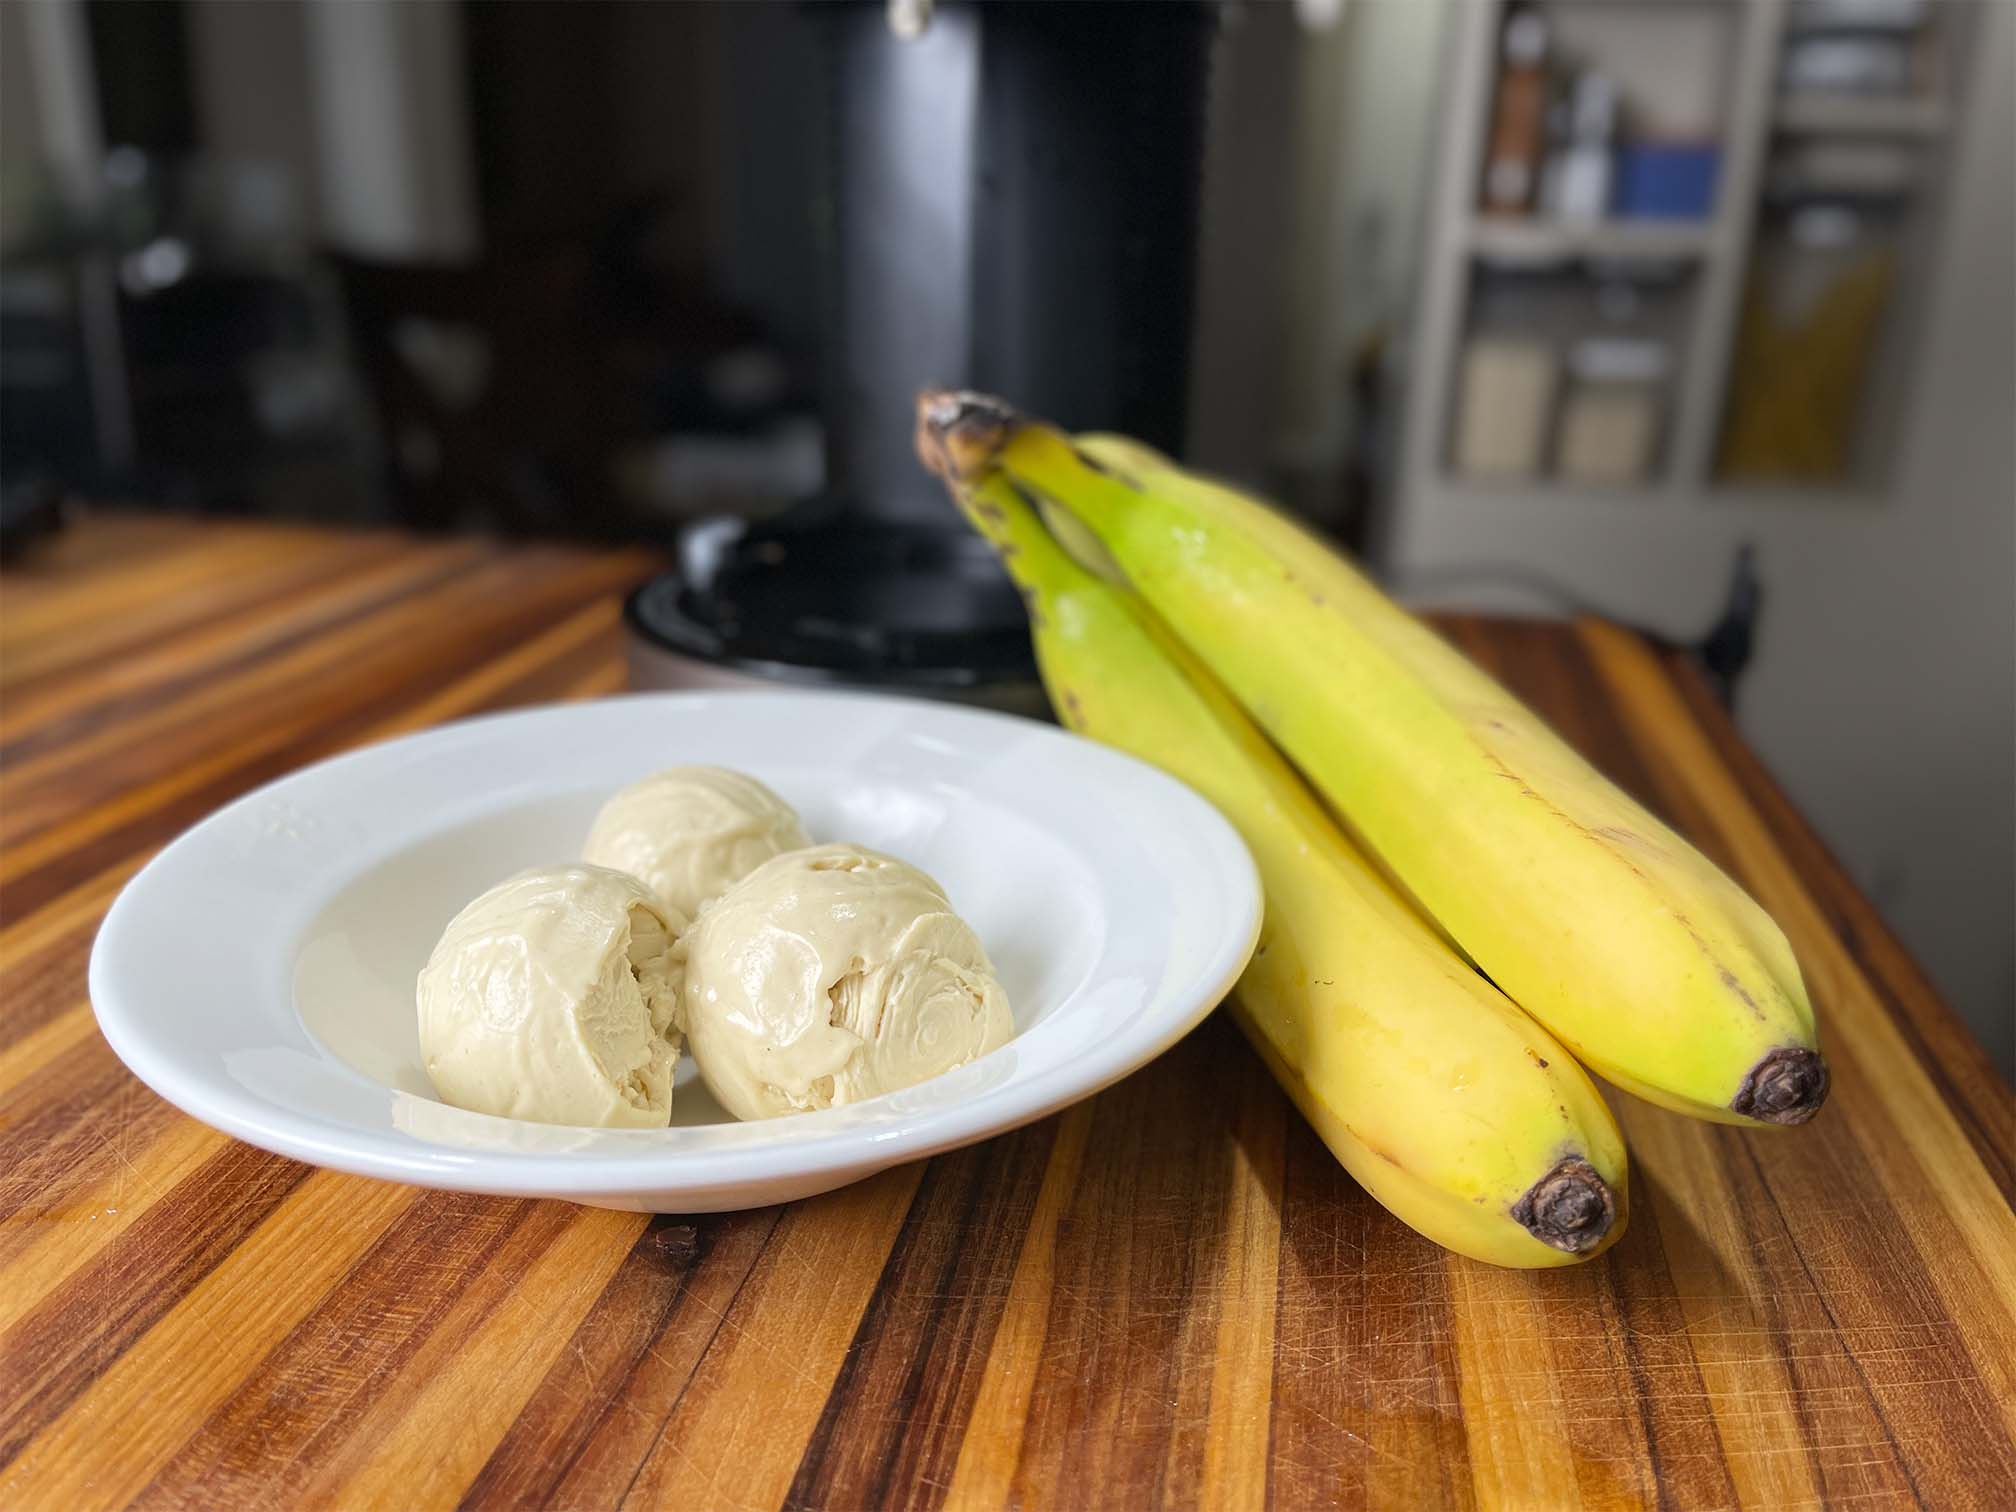 https://www.sizzleandsear.com/wp-content/uploads/2021/12/ninja-creami-review-banana-ice-cream.jpg